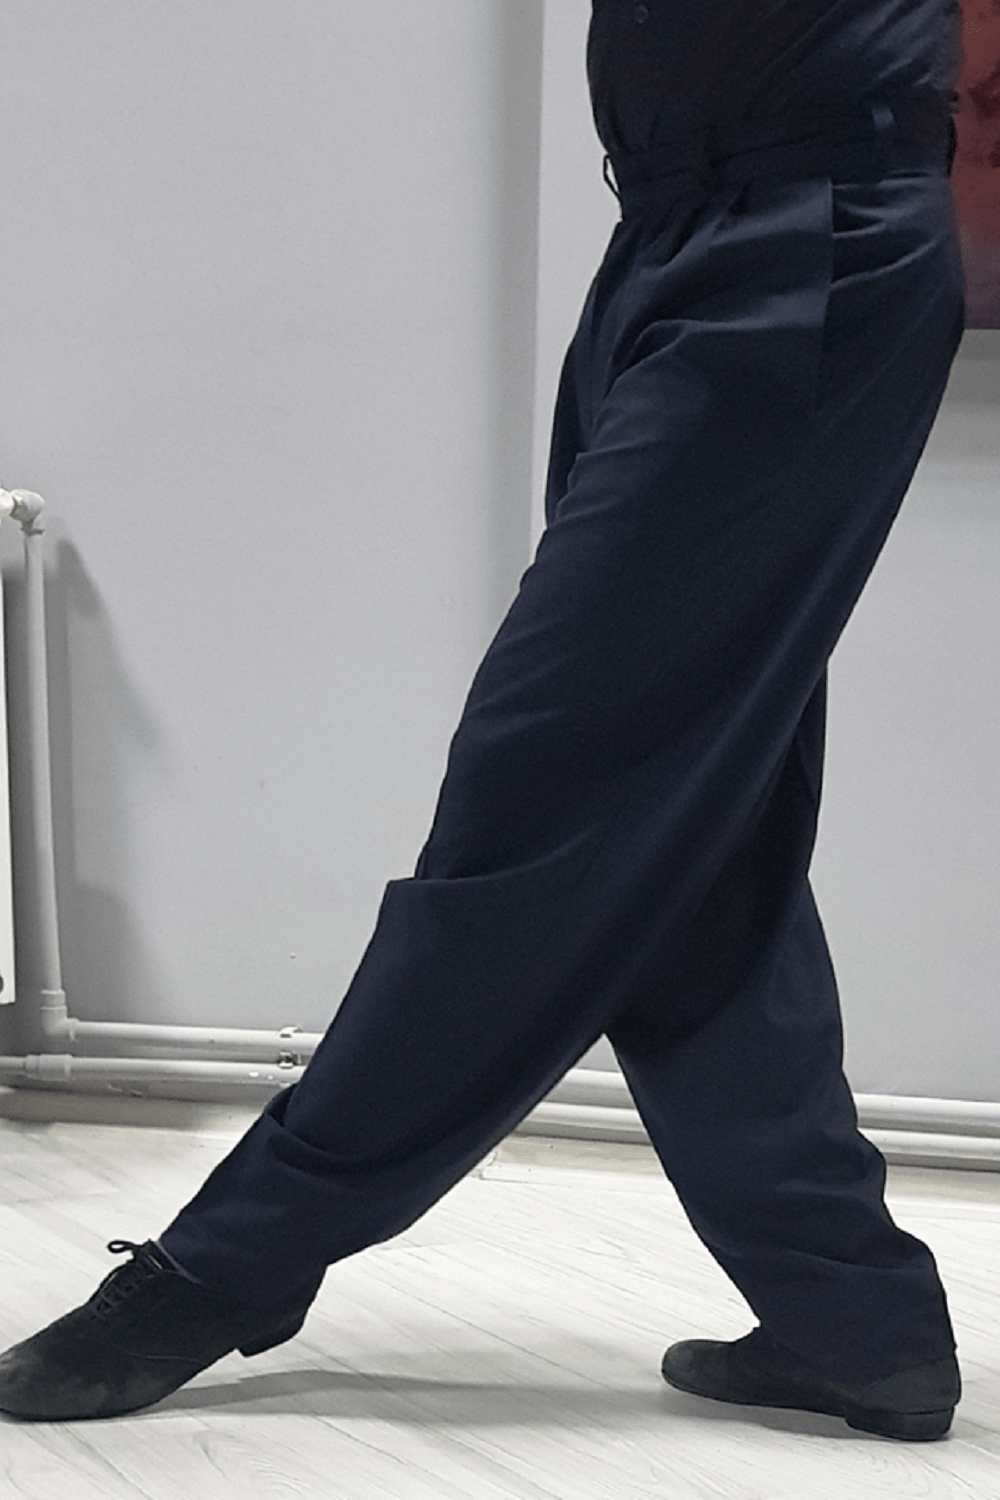 Men's Argentine Tango Pants, Men's Latin Dance Pants, Gray Pants With Three  Pleats, Social Dancing Trousers for Men, Men's Wide Leg Pants 